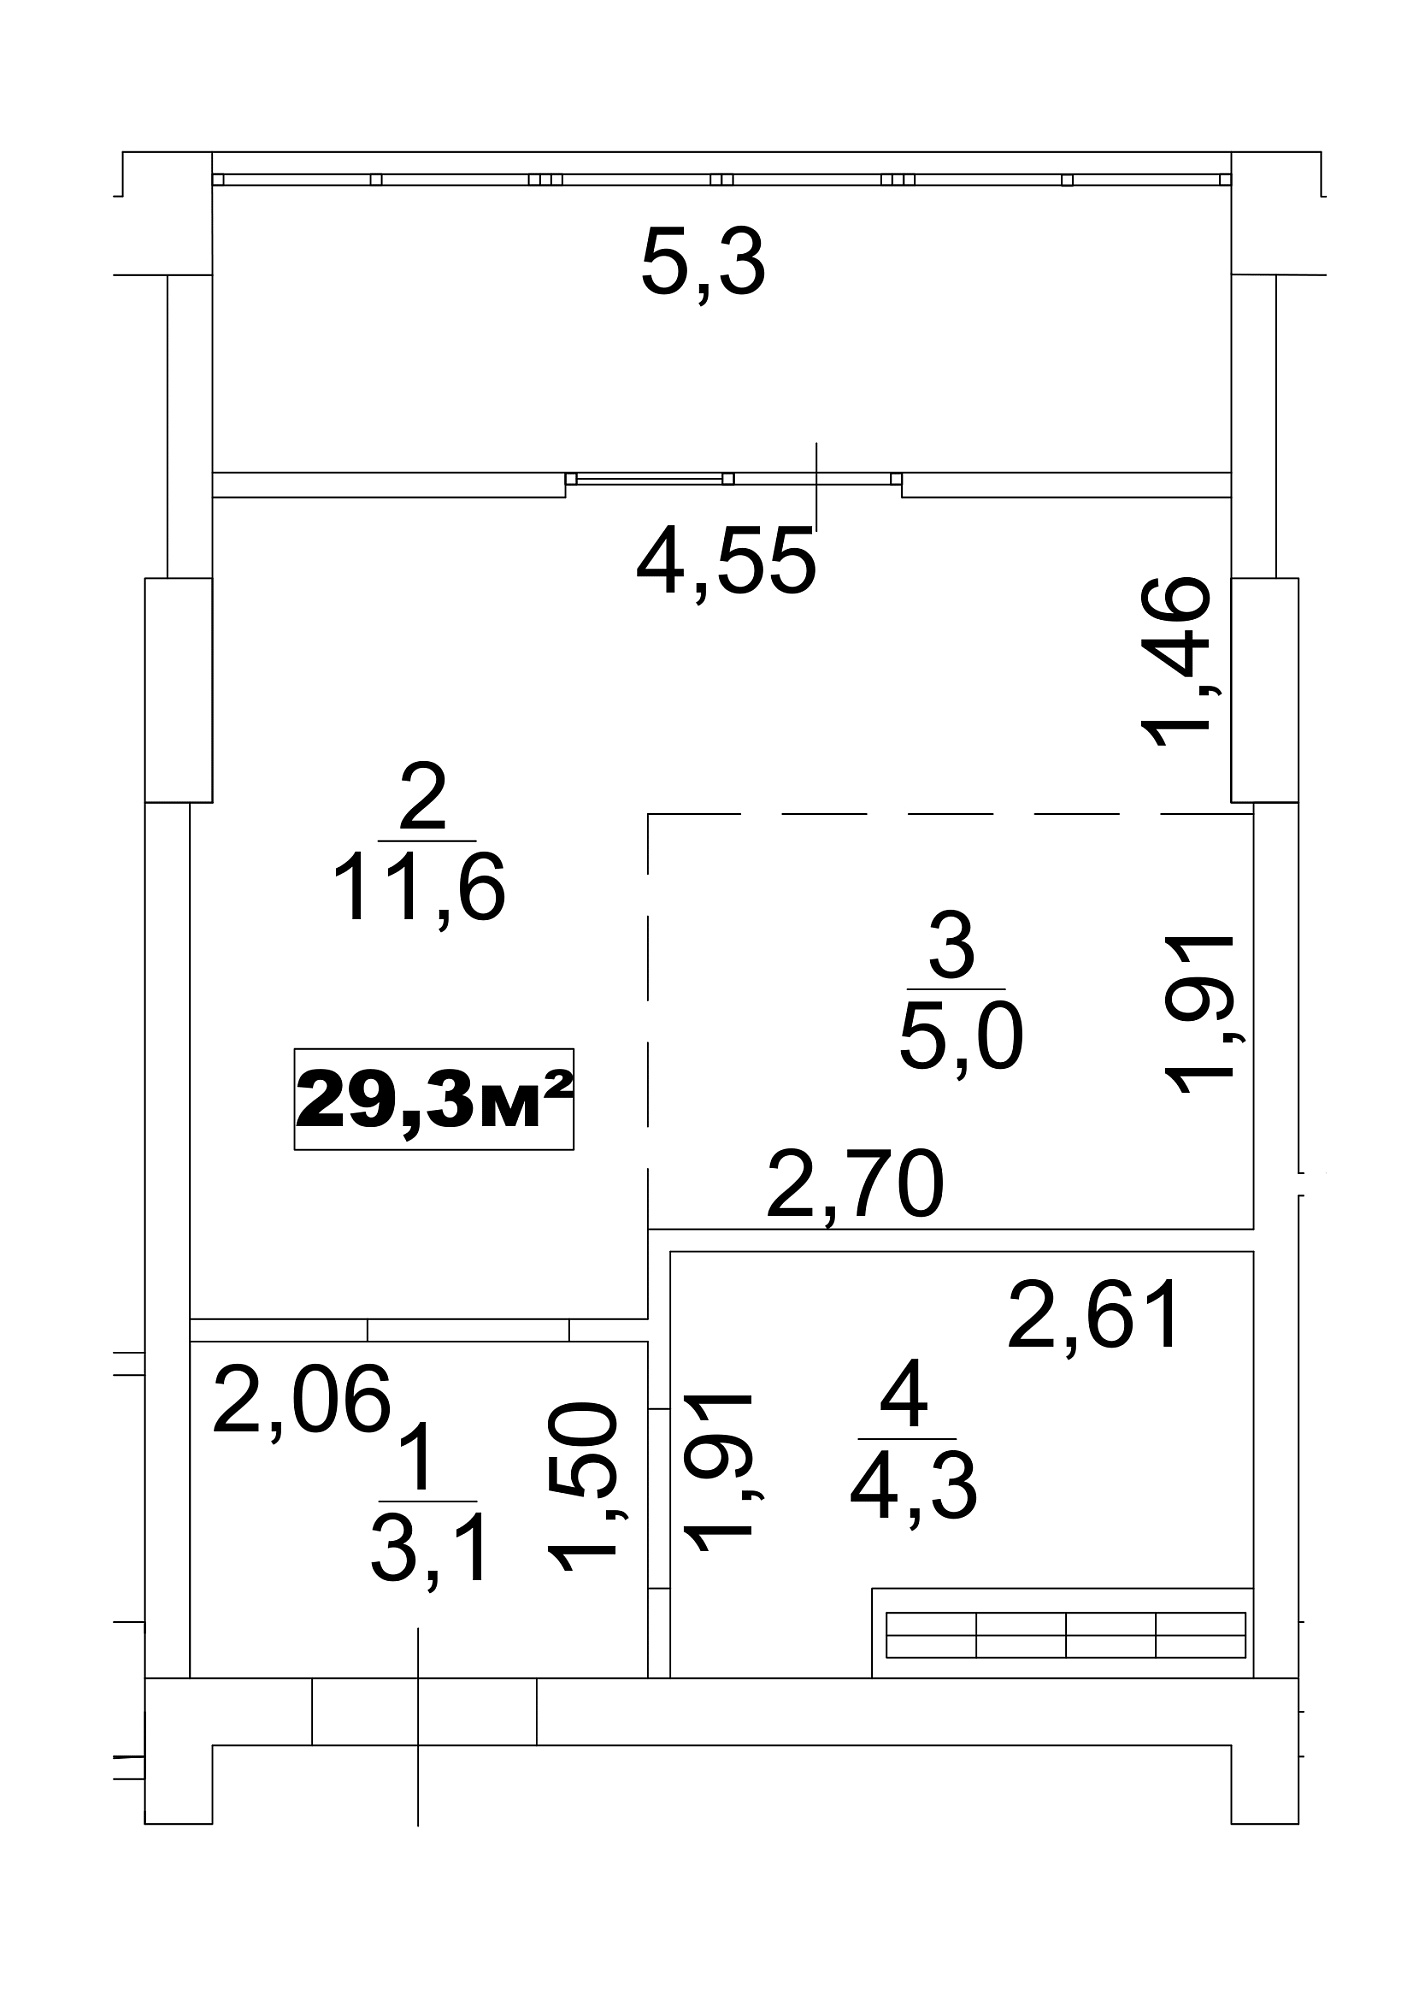 Planning Smart flats area 29.3m2, AB-13-08/00065.